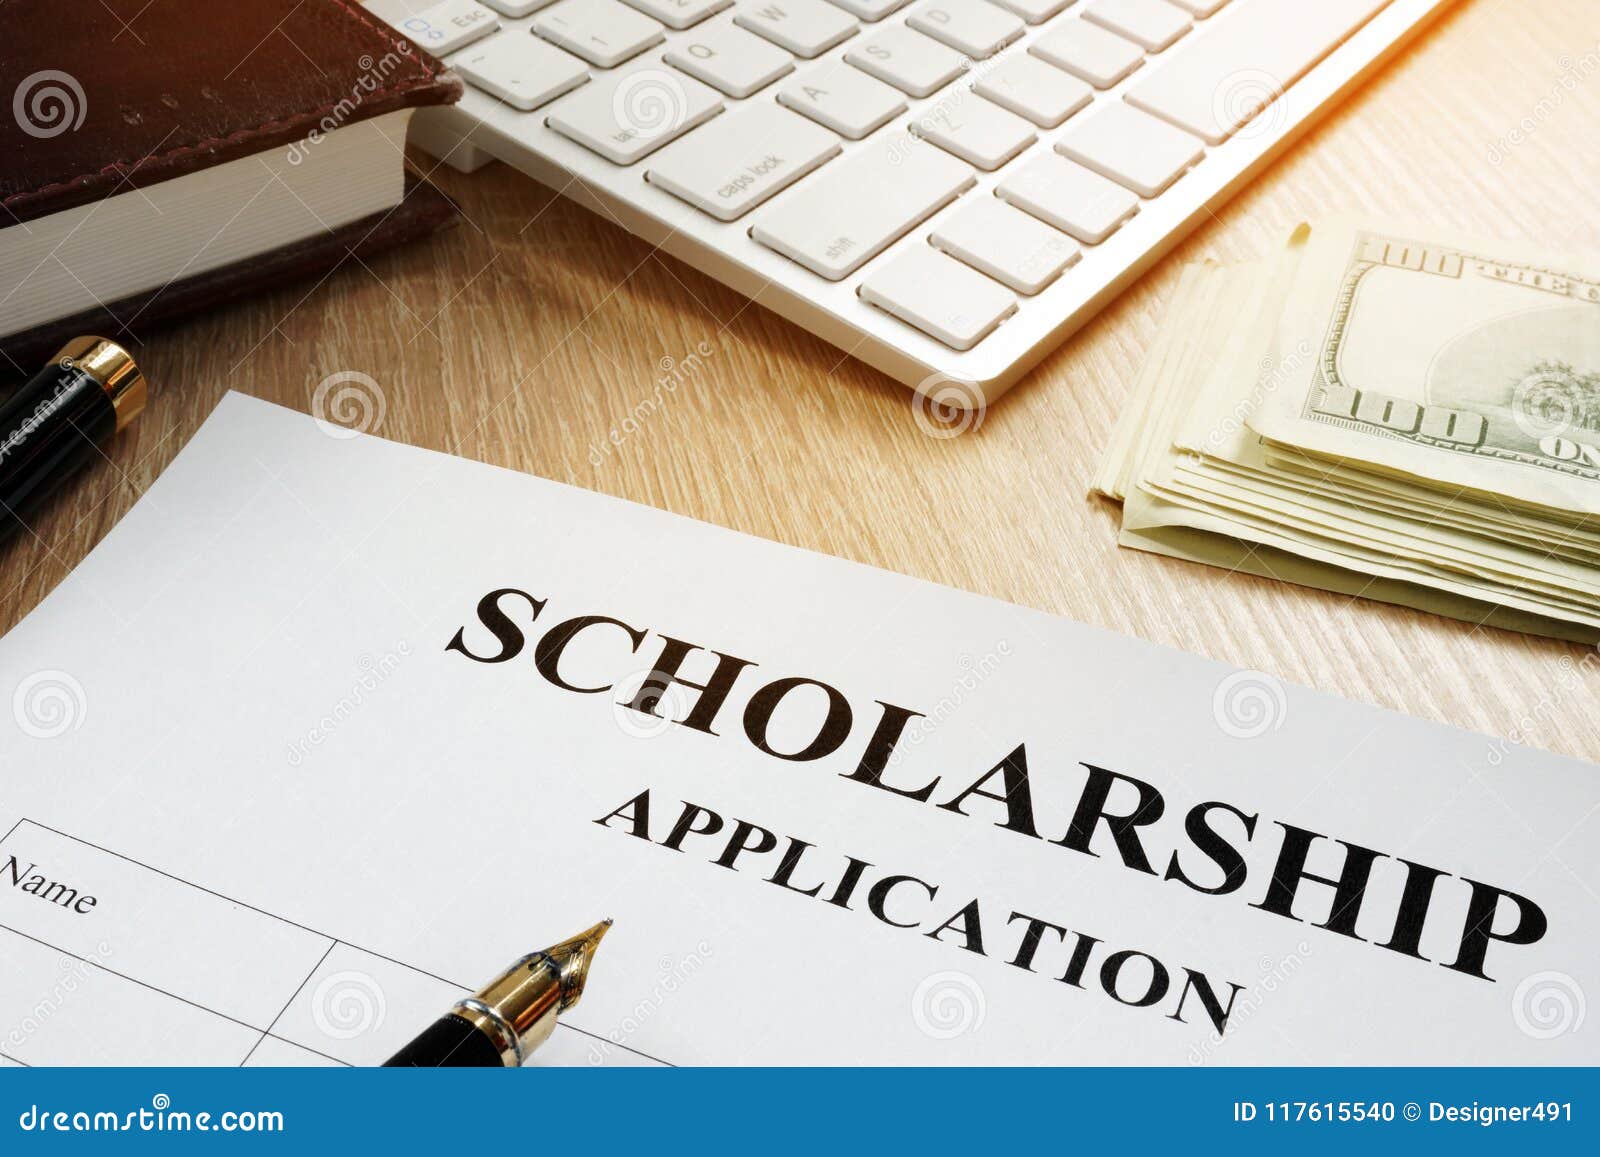 scholarship application for student. money for education.